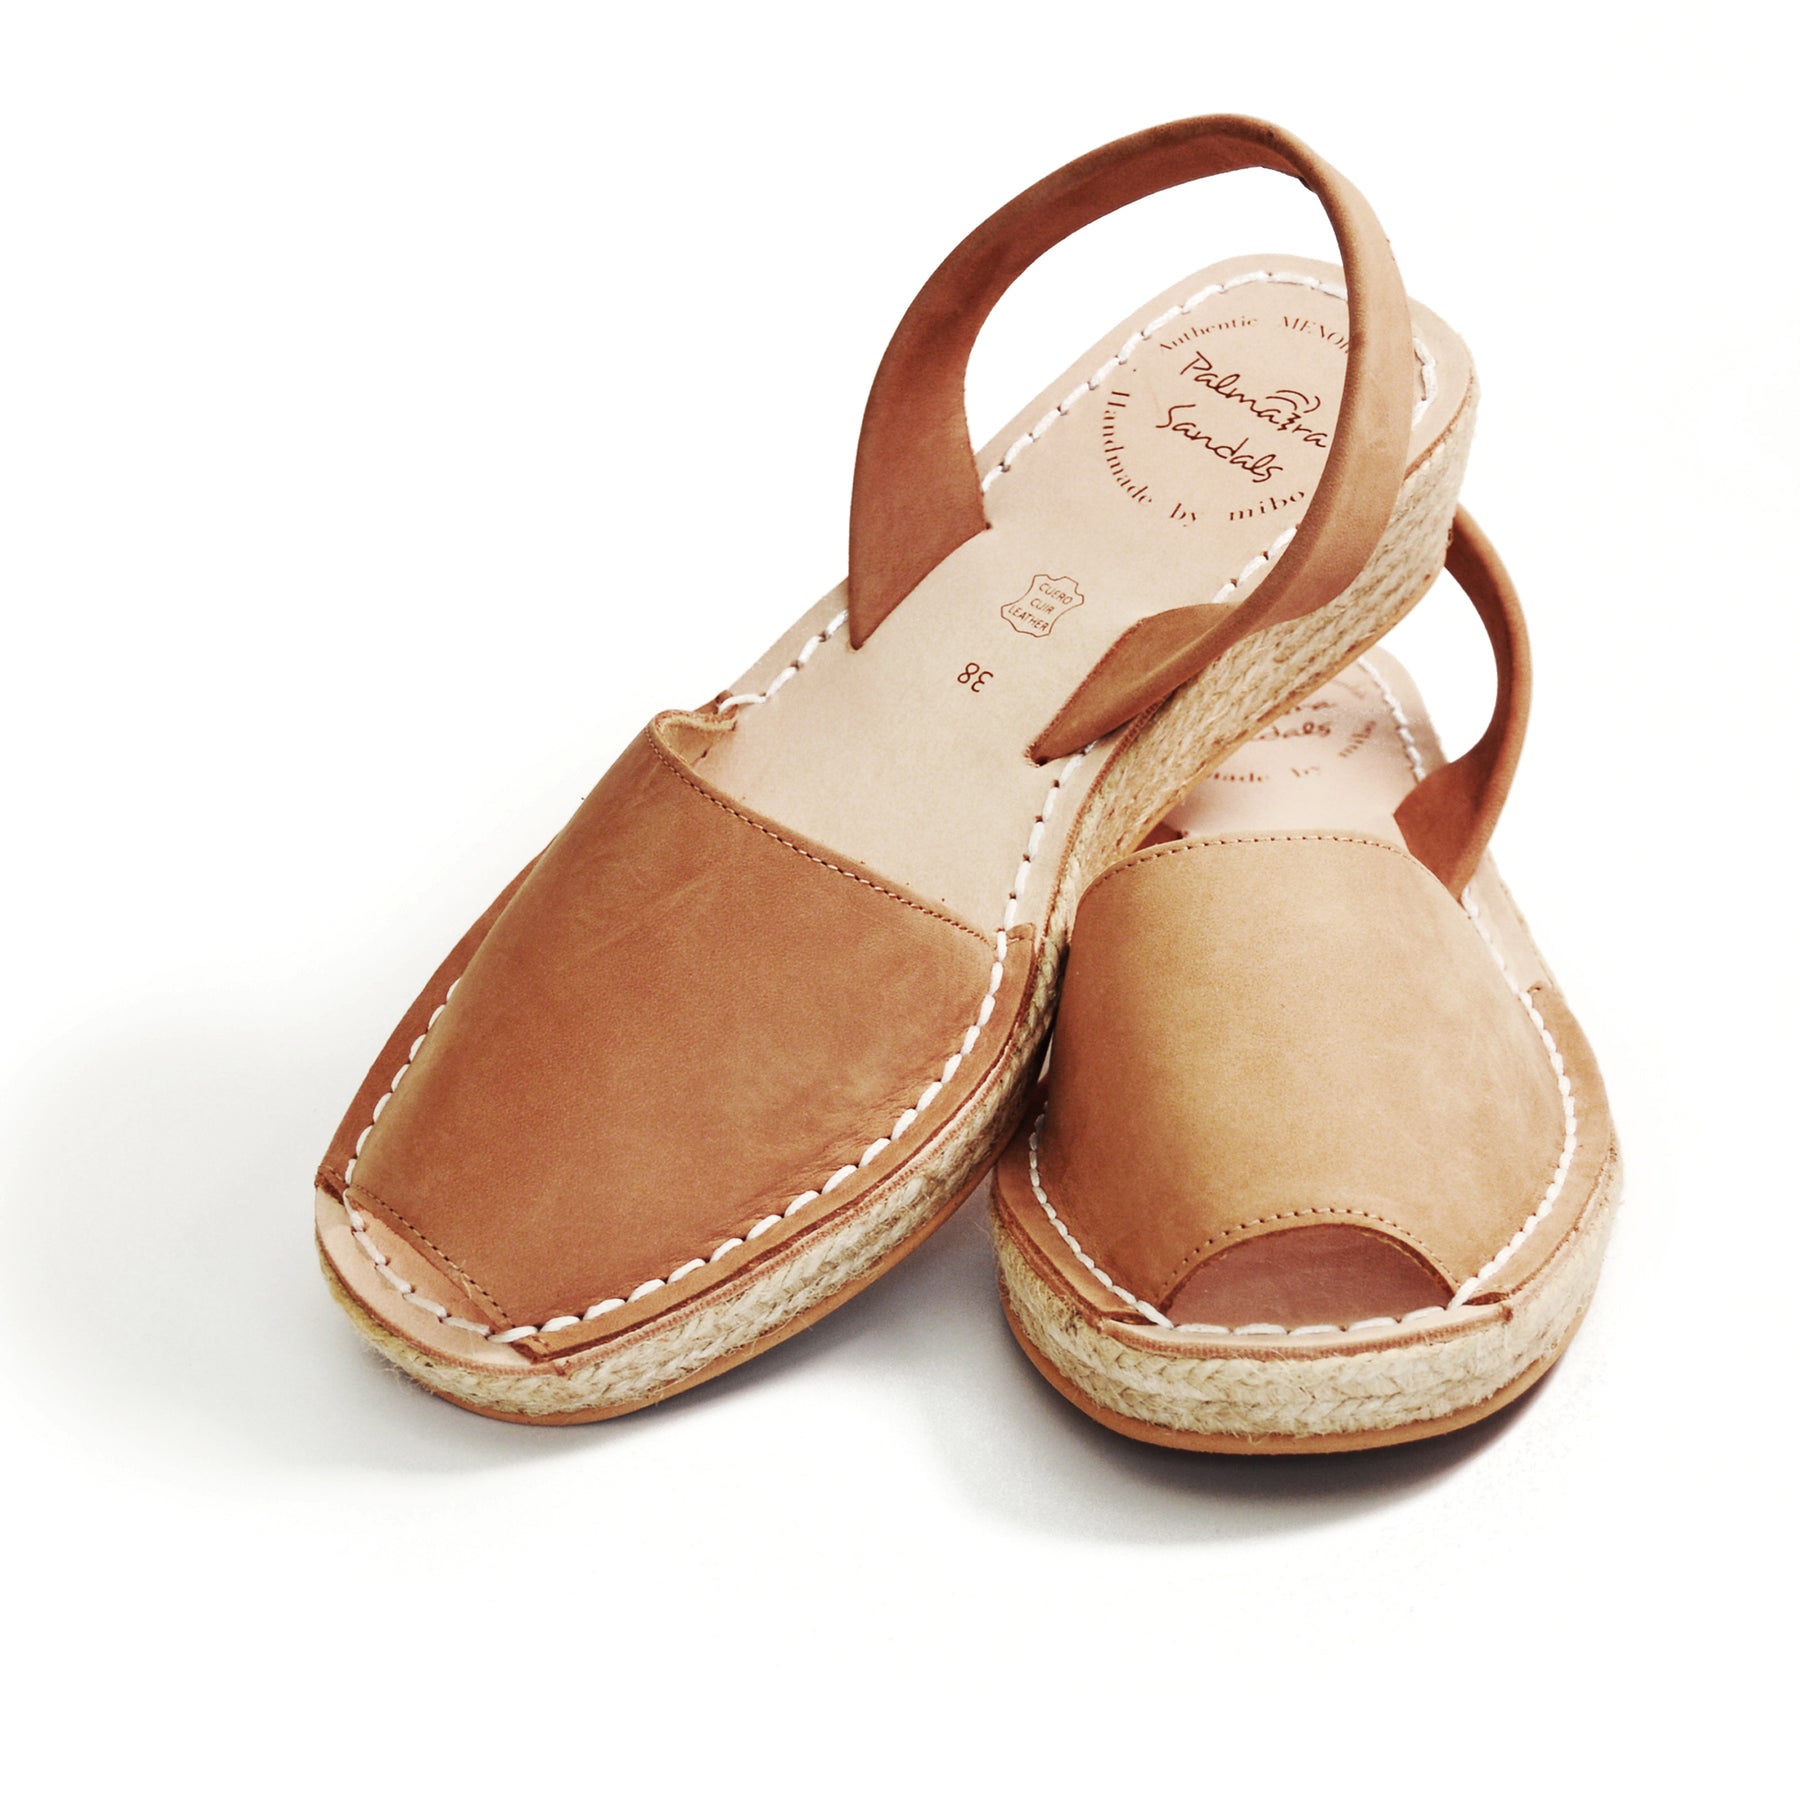 Tan nubuck leather low espadrille wedge spanish avarca style sandals